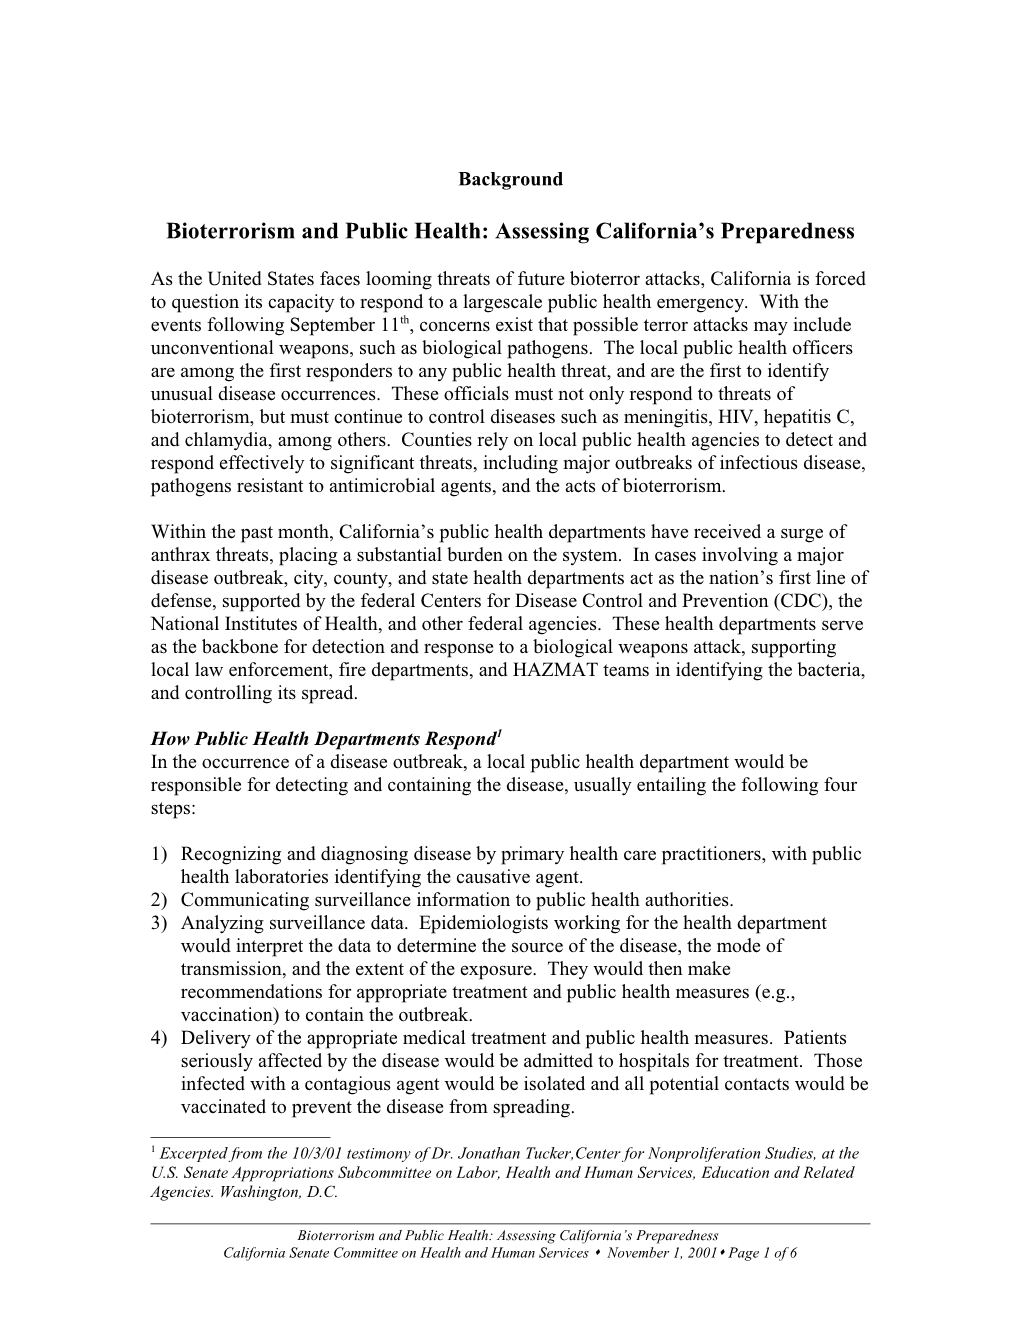 Bioterrorism and Public Health: Assessing California S Preparedness